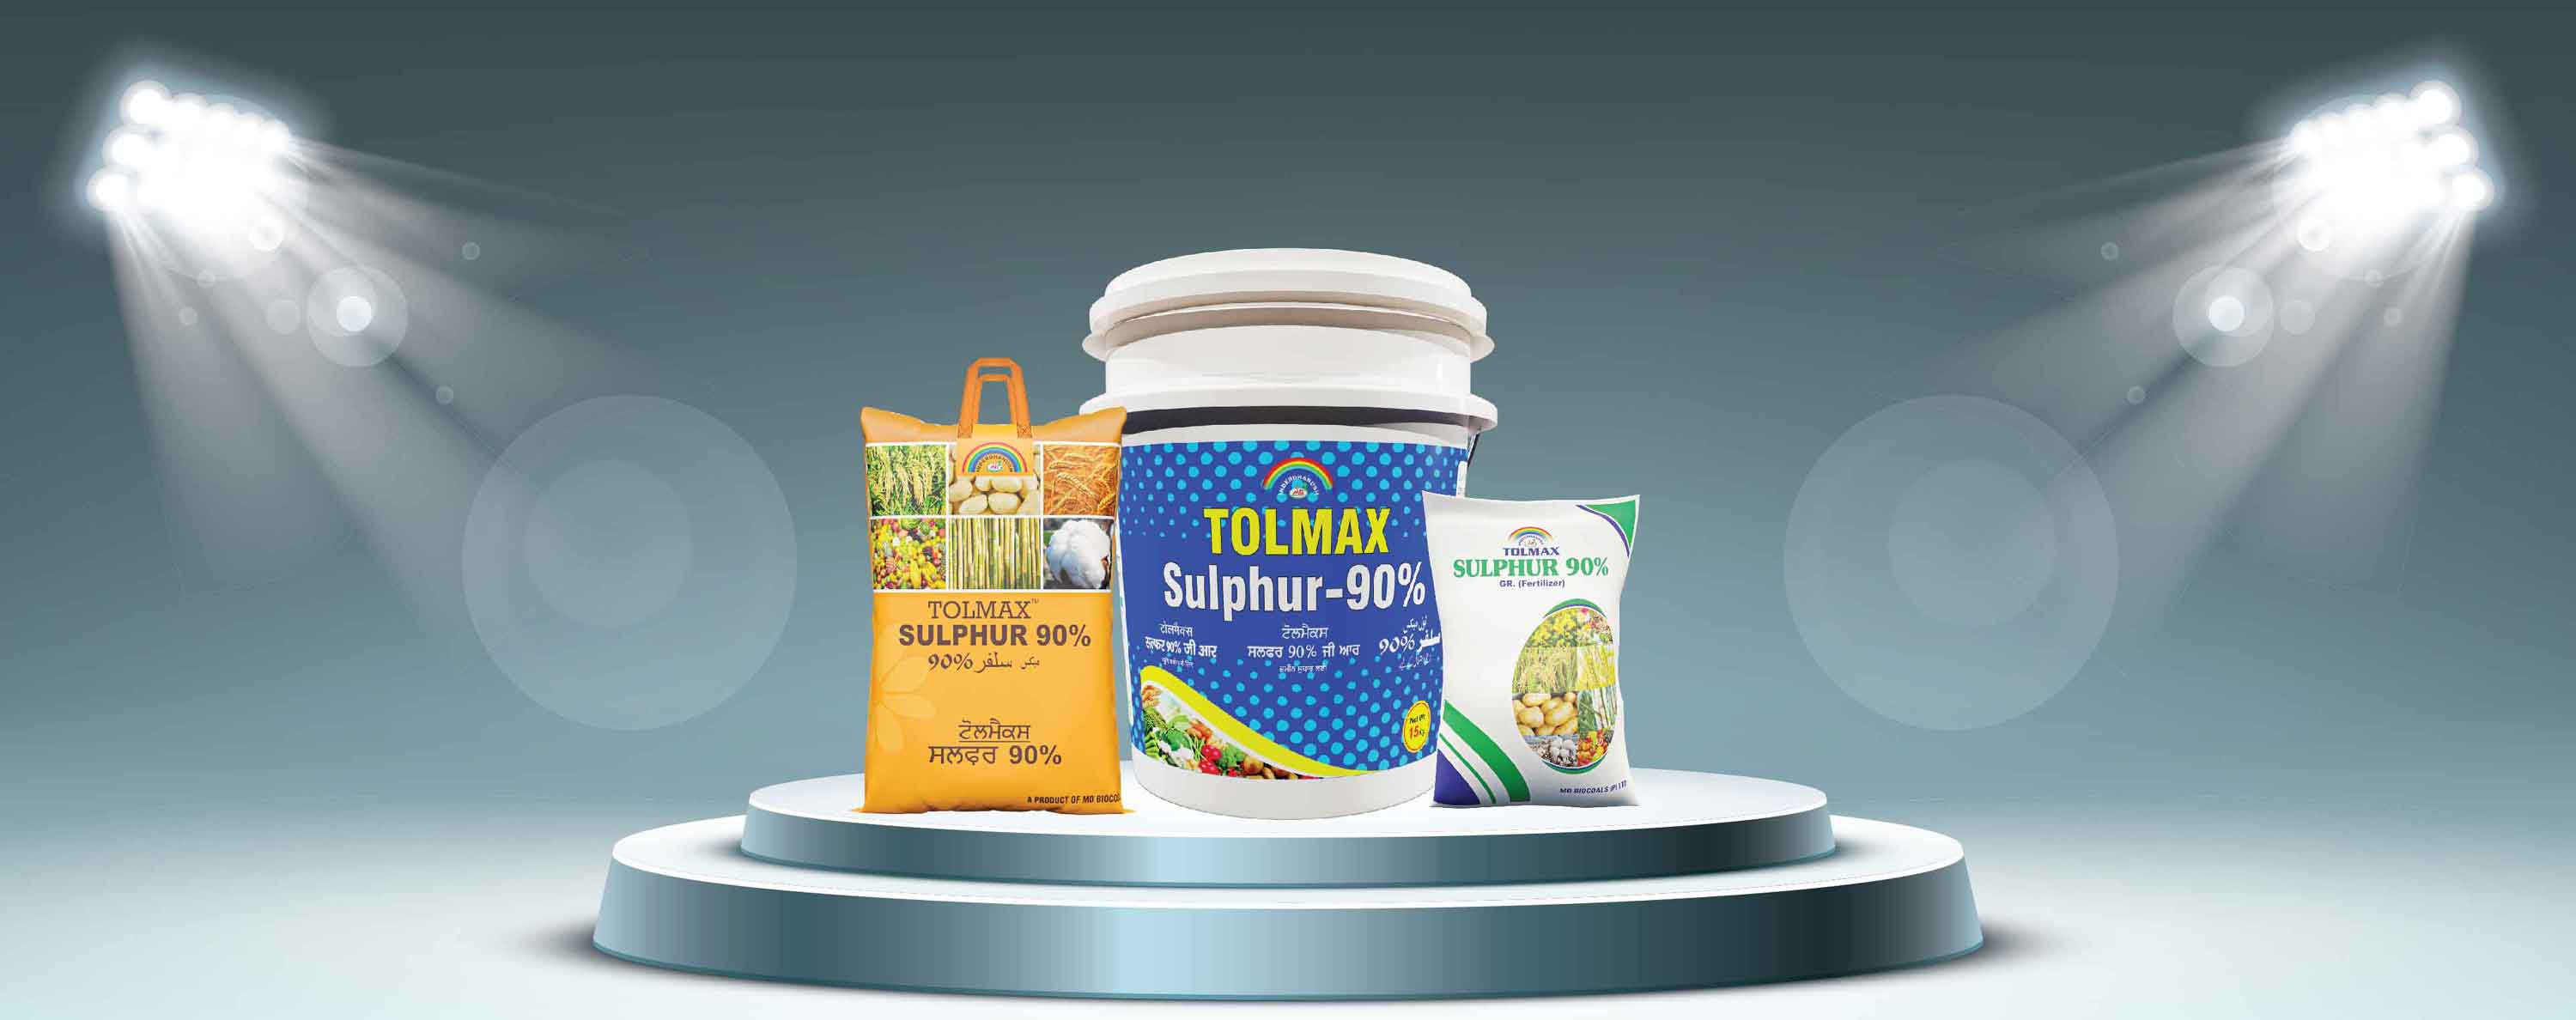 tolmax sulphur, md-80, believe biopesticide